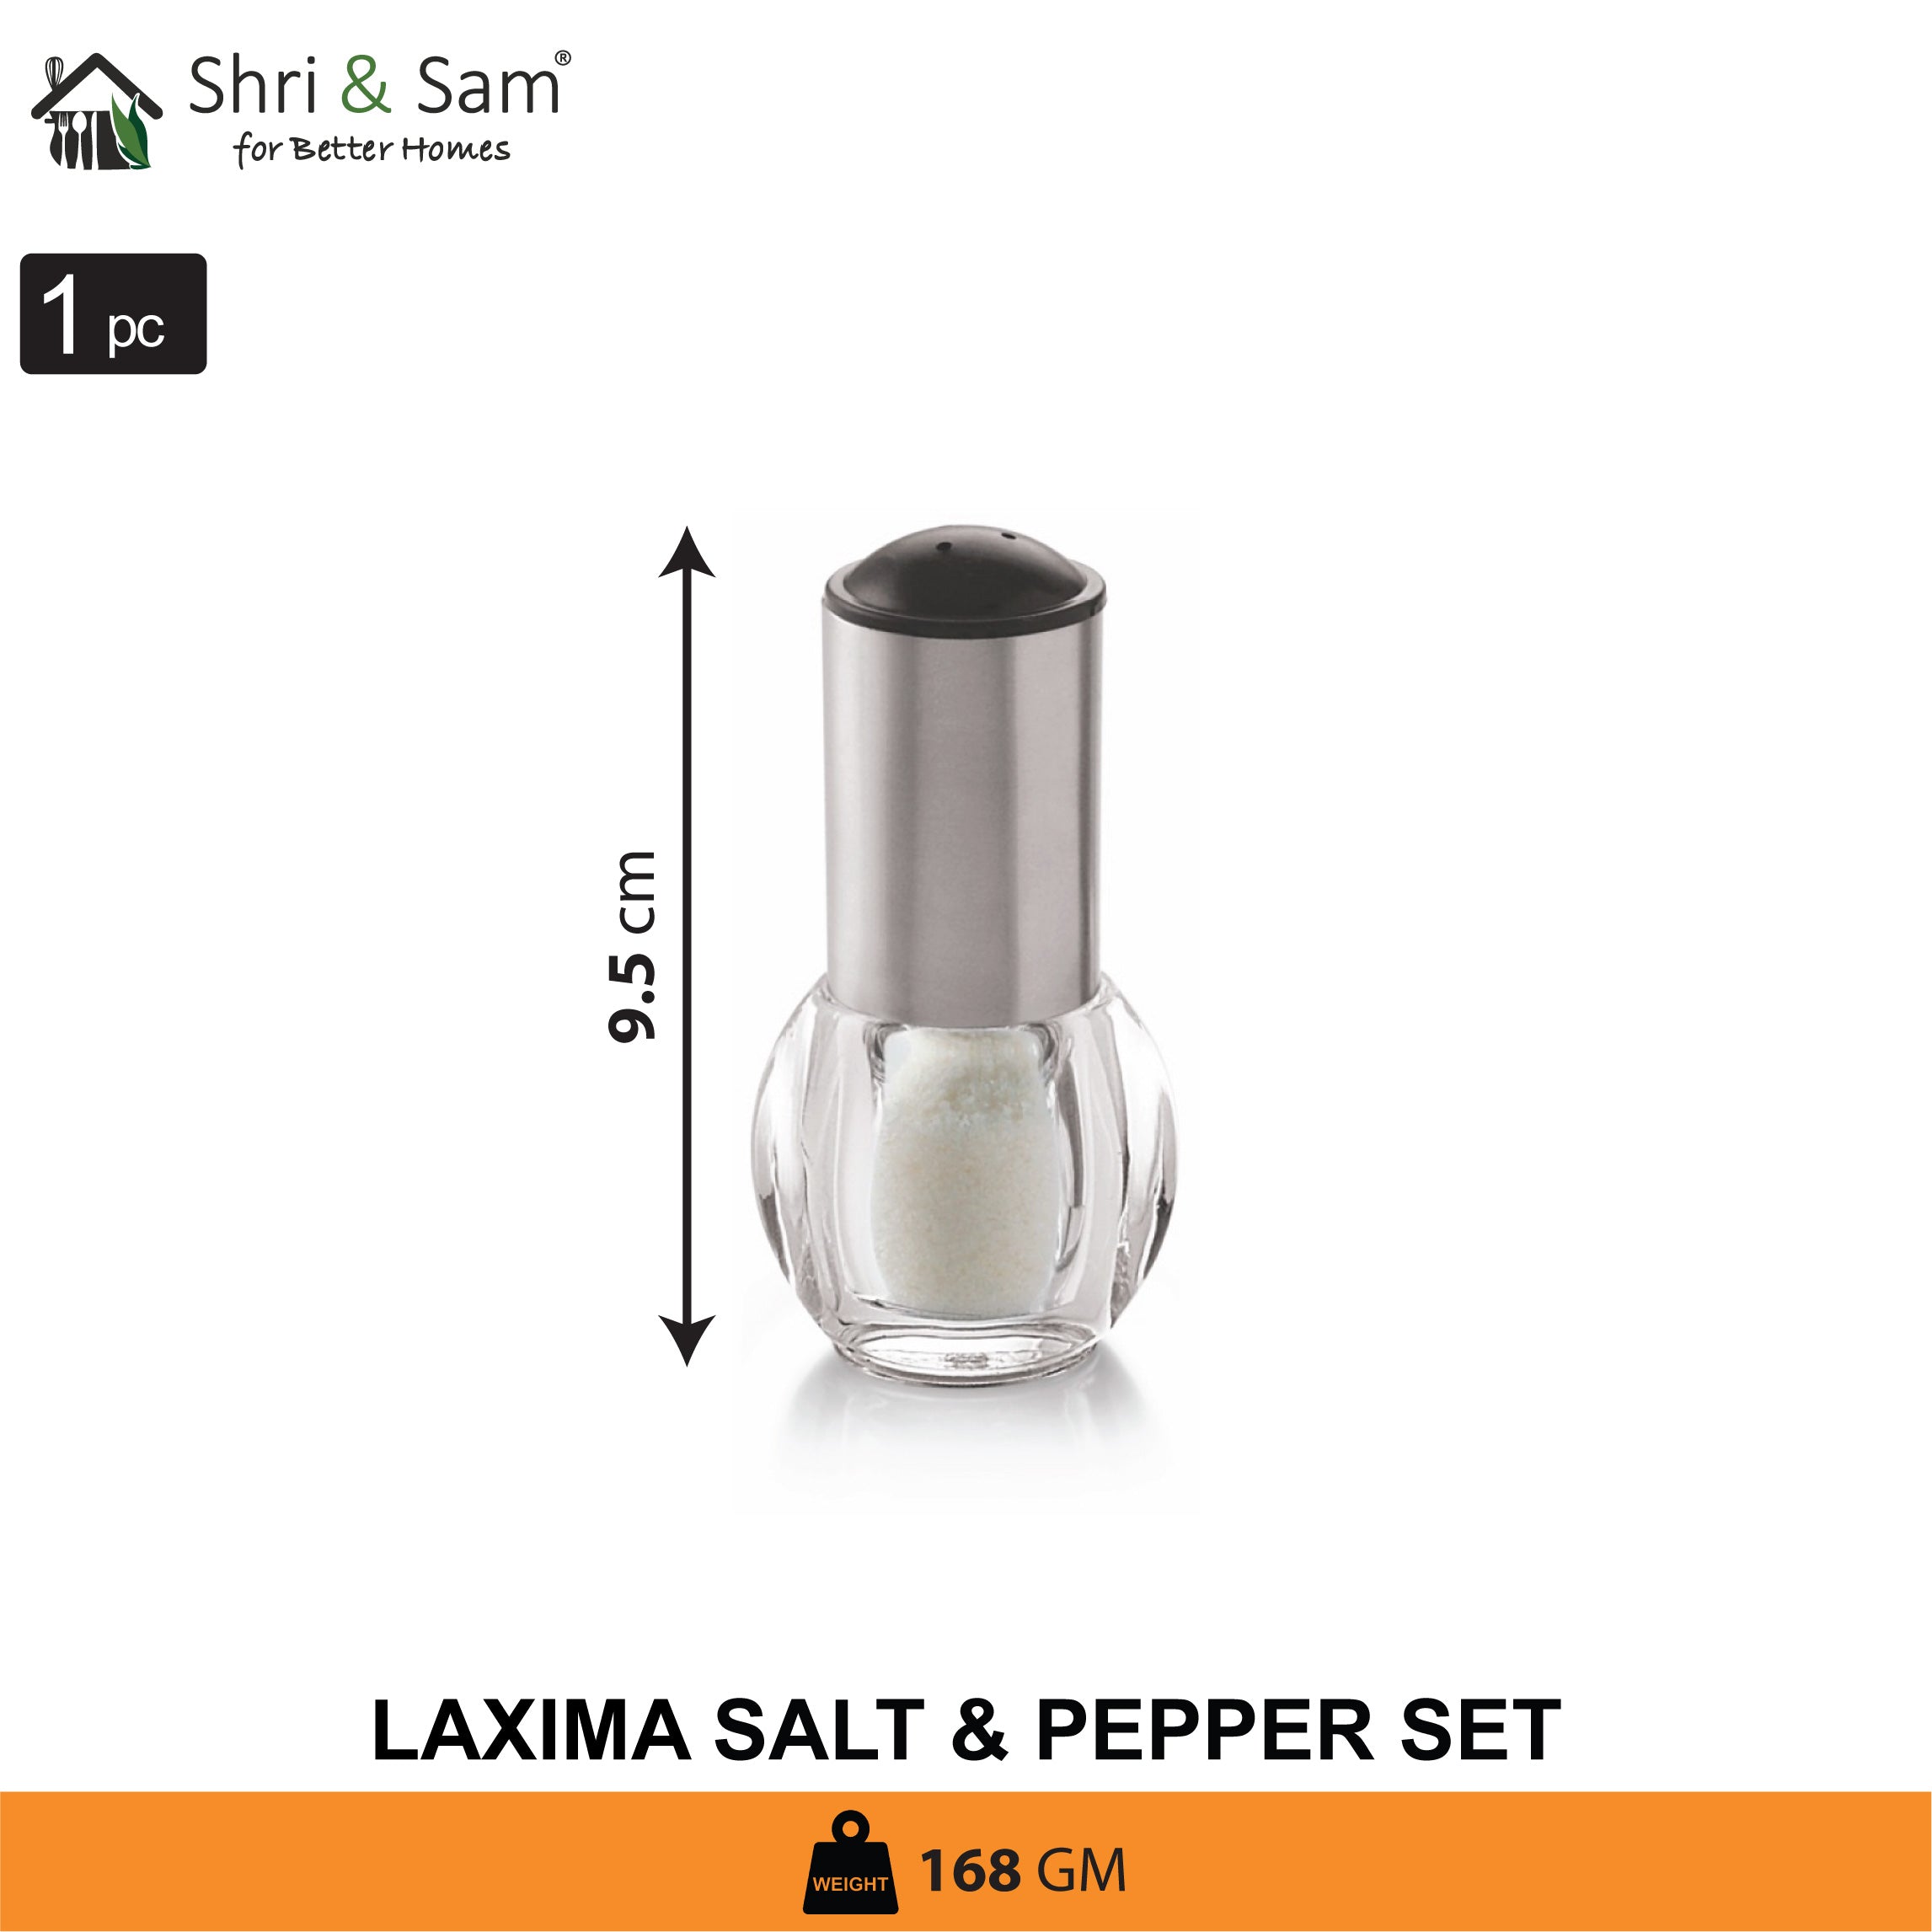 Stainless Steel Laxima Salt & Pepper